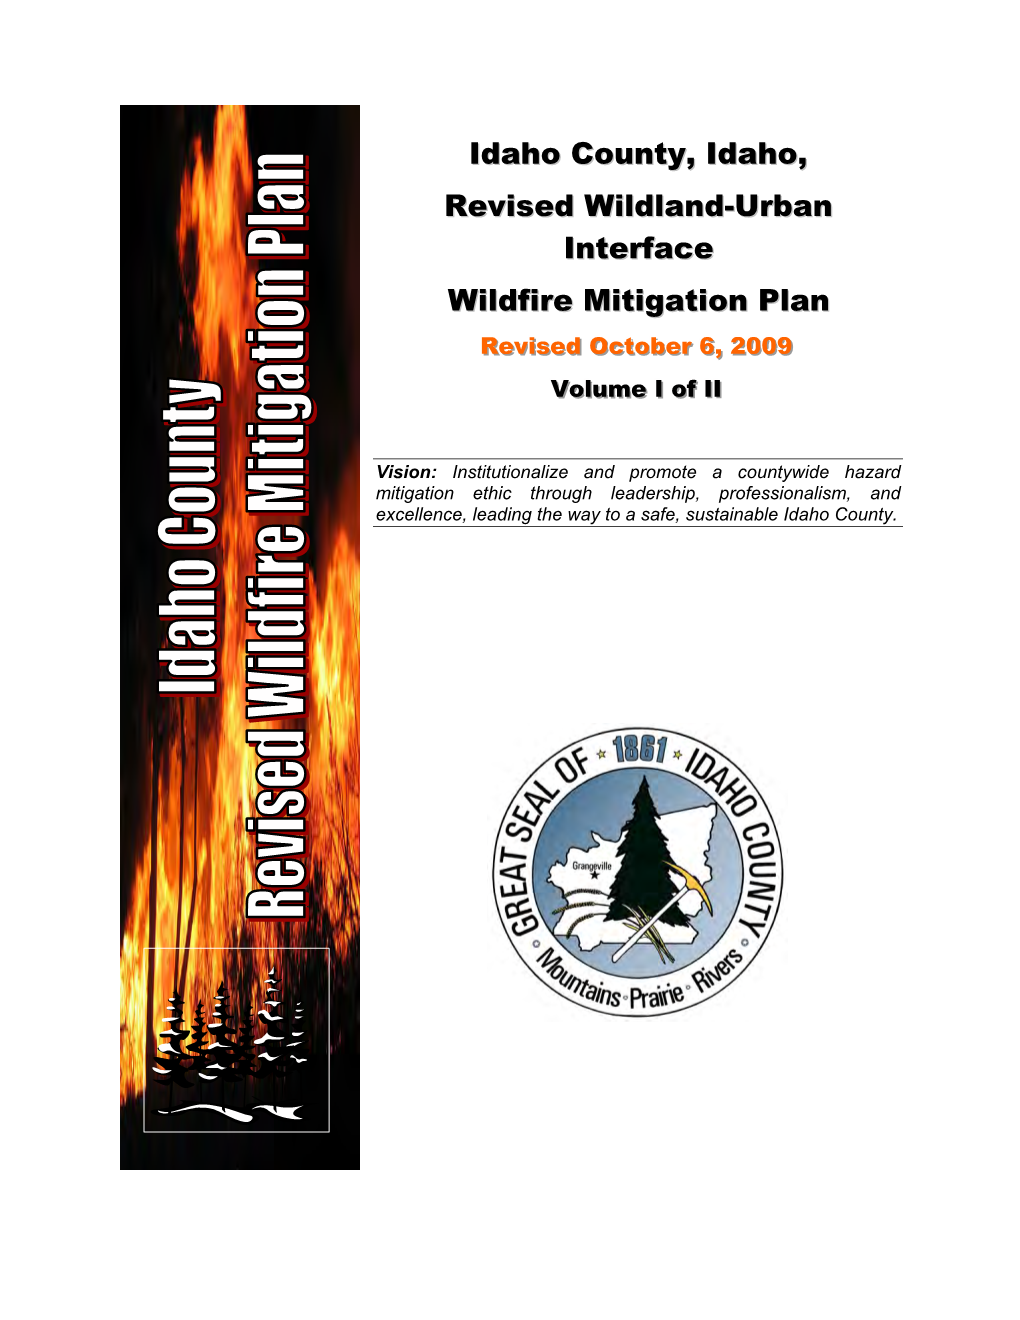 Idaho County, Idaho, Revised Wildland-Urban Interface Wildfire